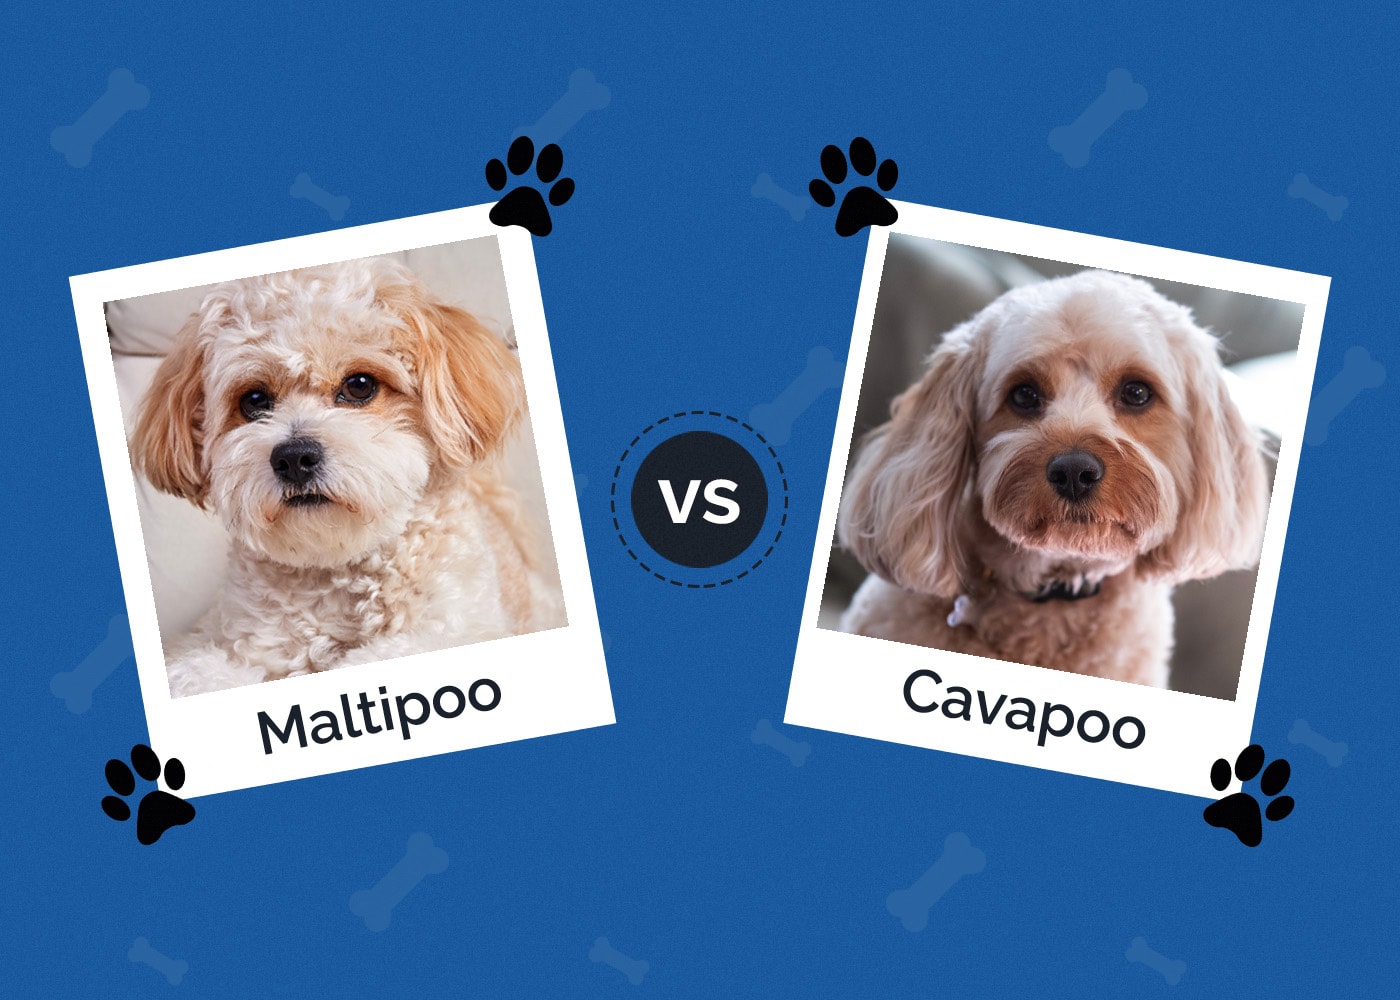 Maltipoo vs Cavapoo